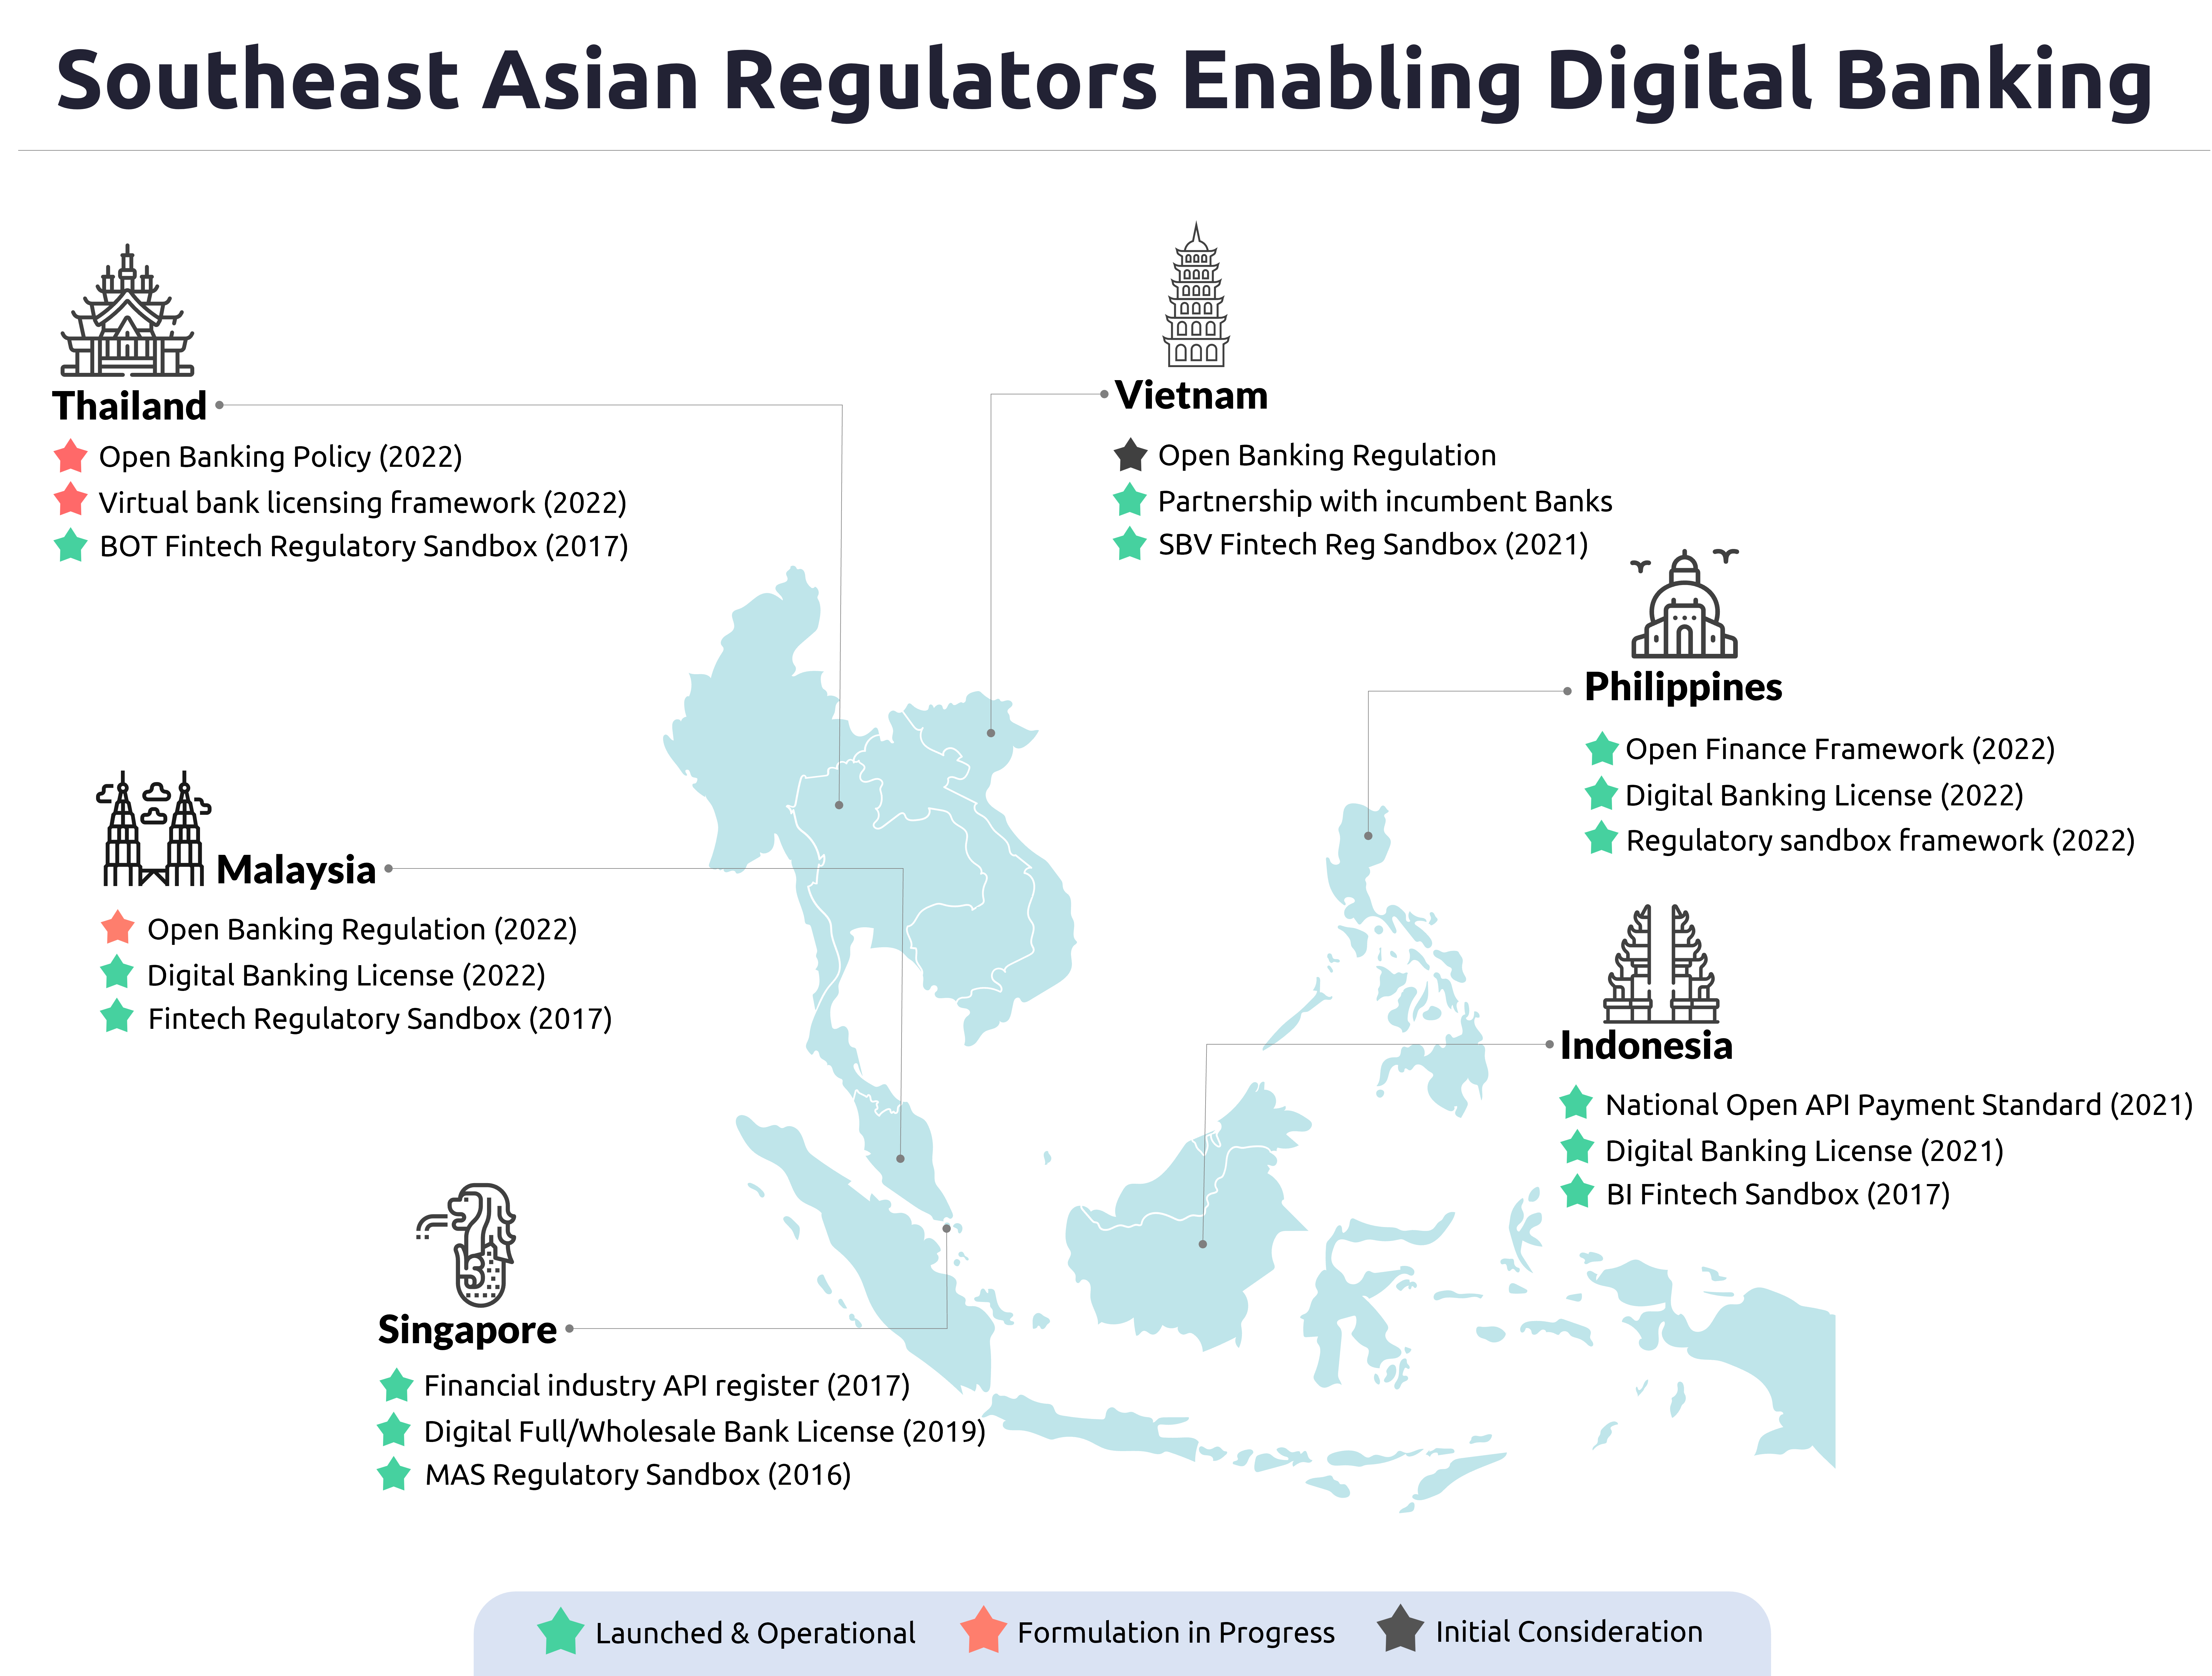 Msme Digital Banking Regulations In Southeast Asia